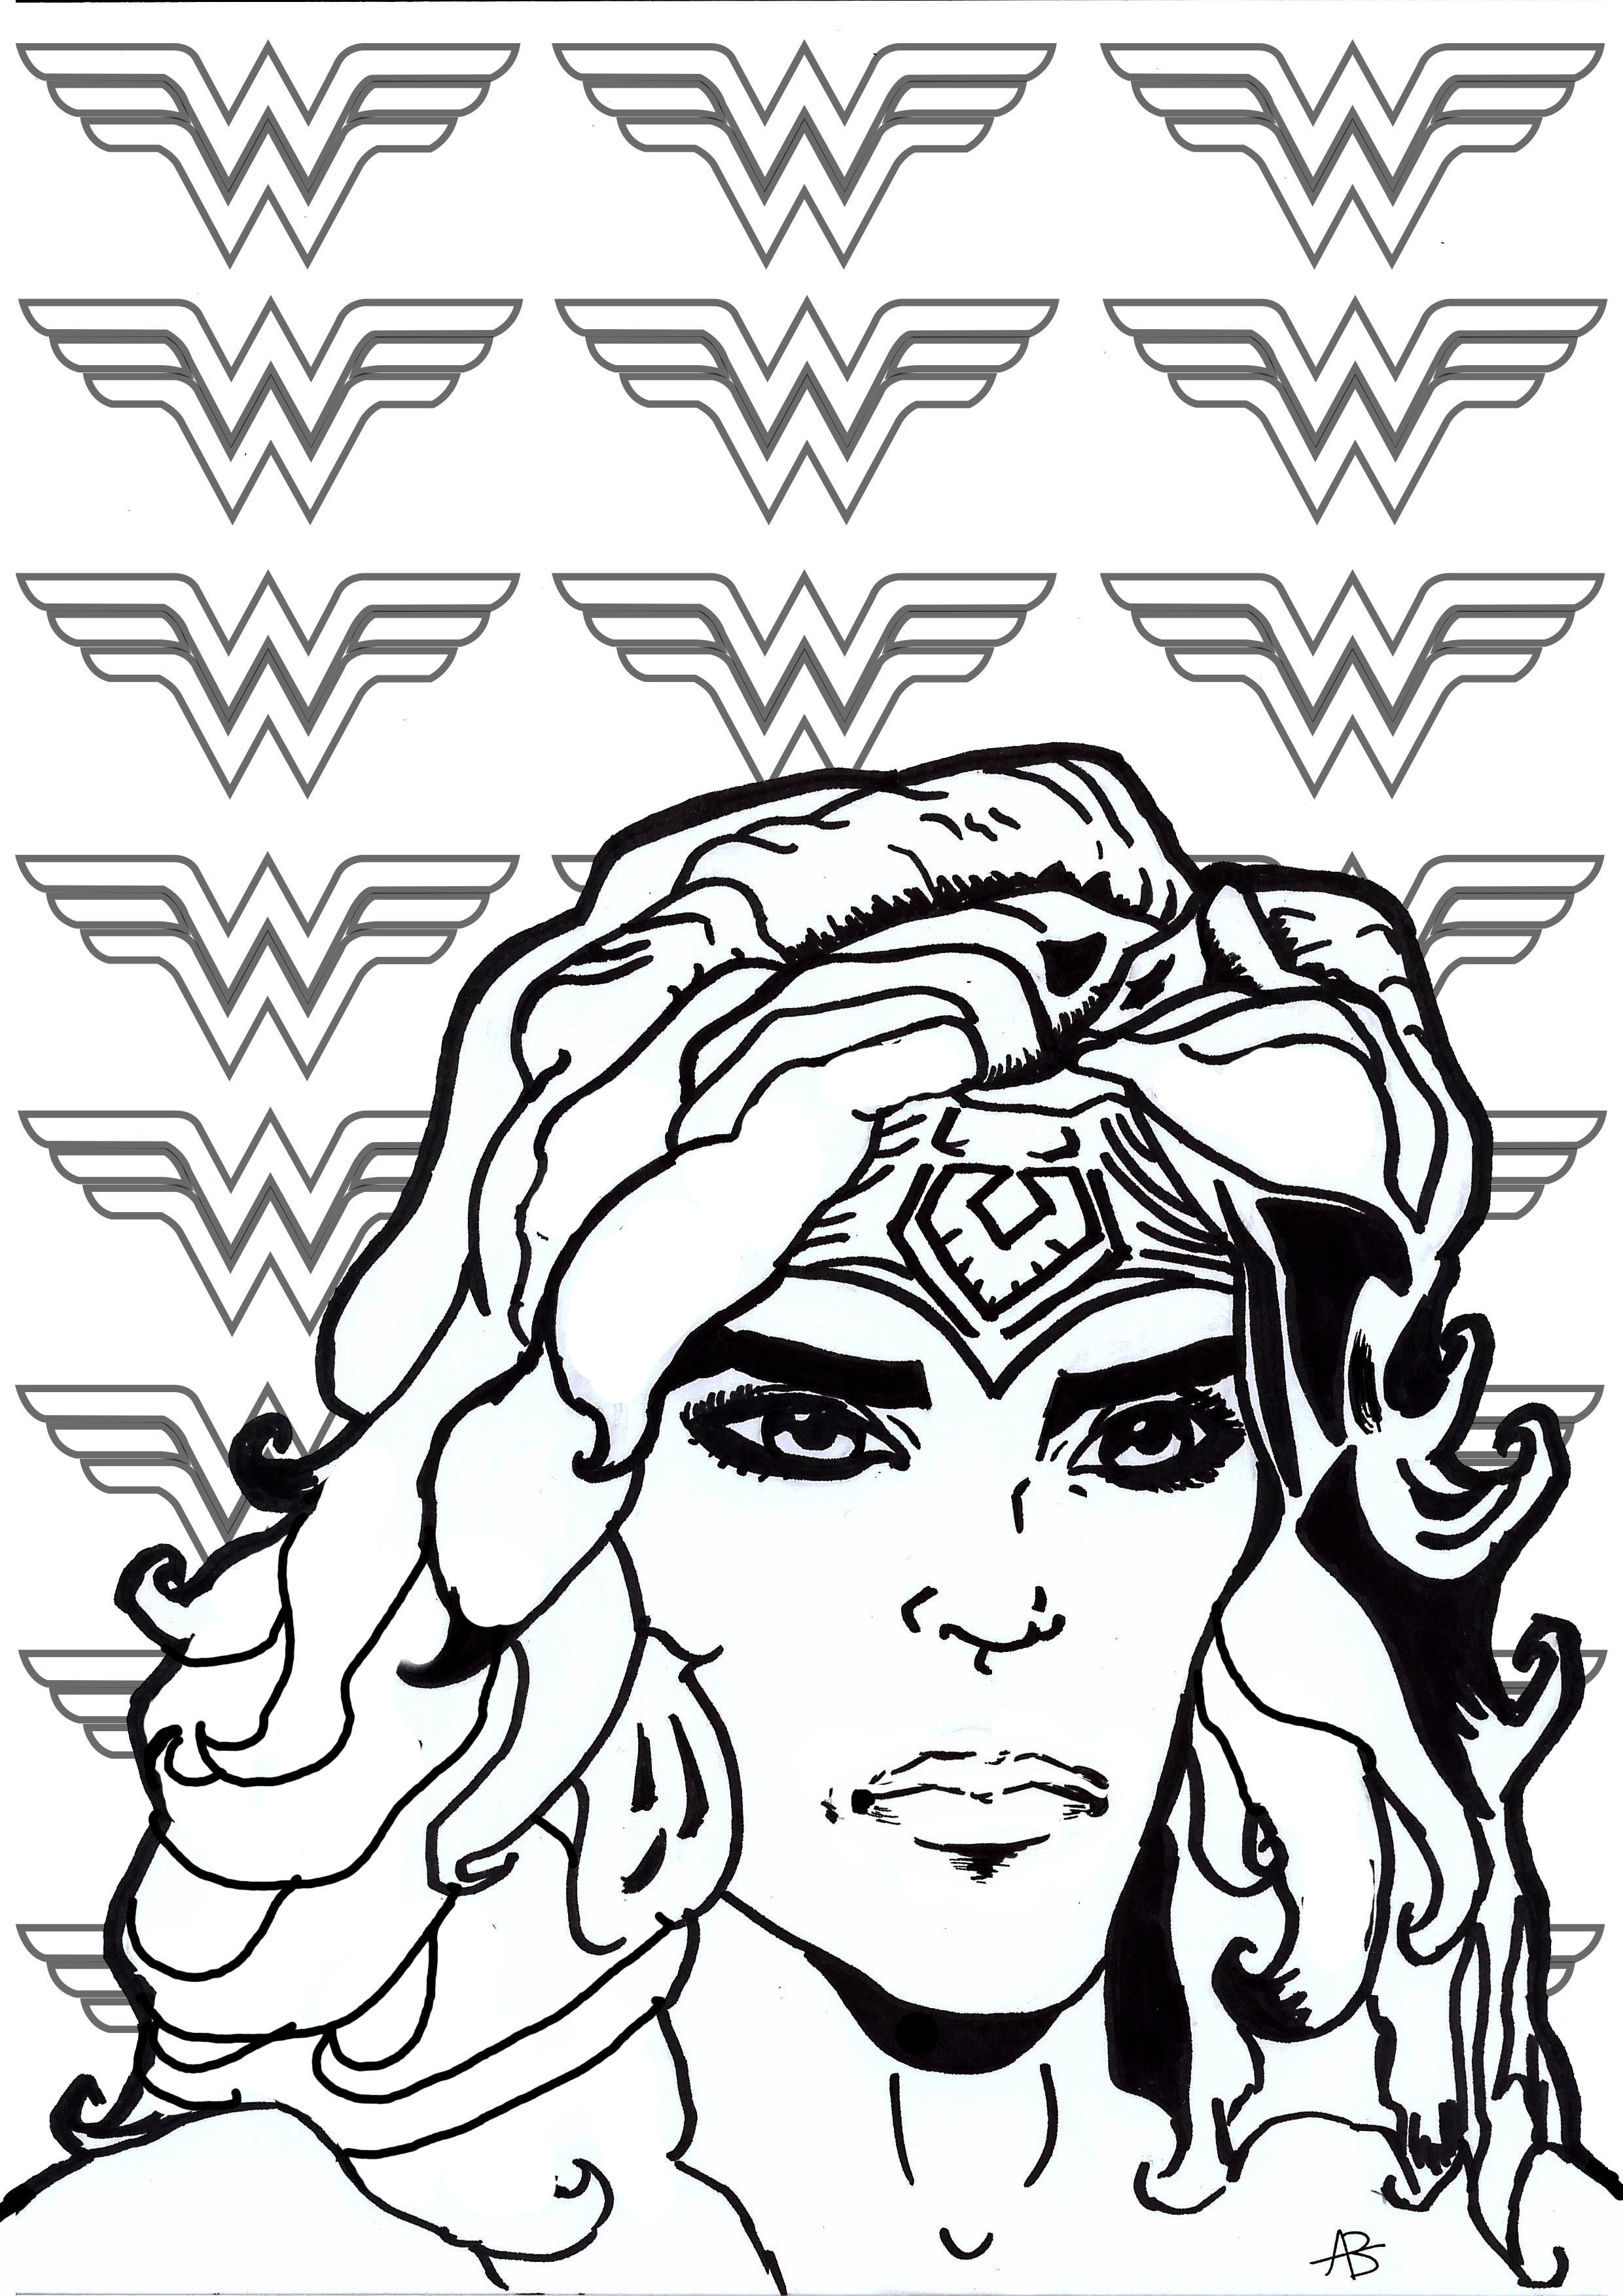 Página para colorear inspirada en Wonder Woman (personaje de DC Comics)